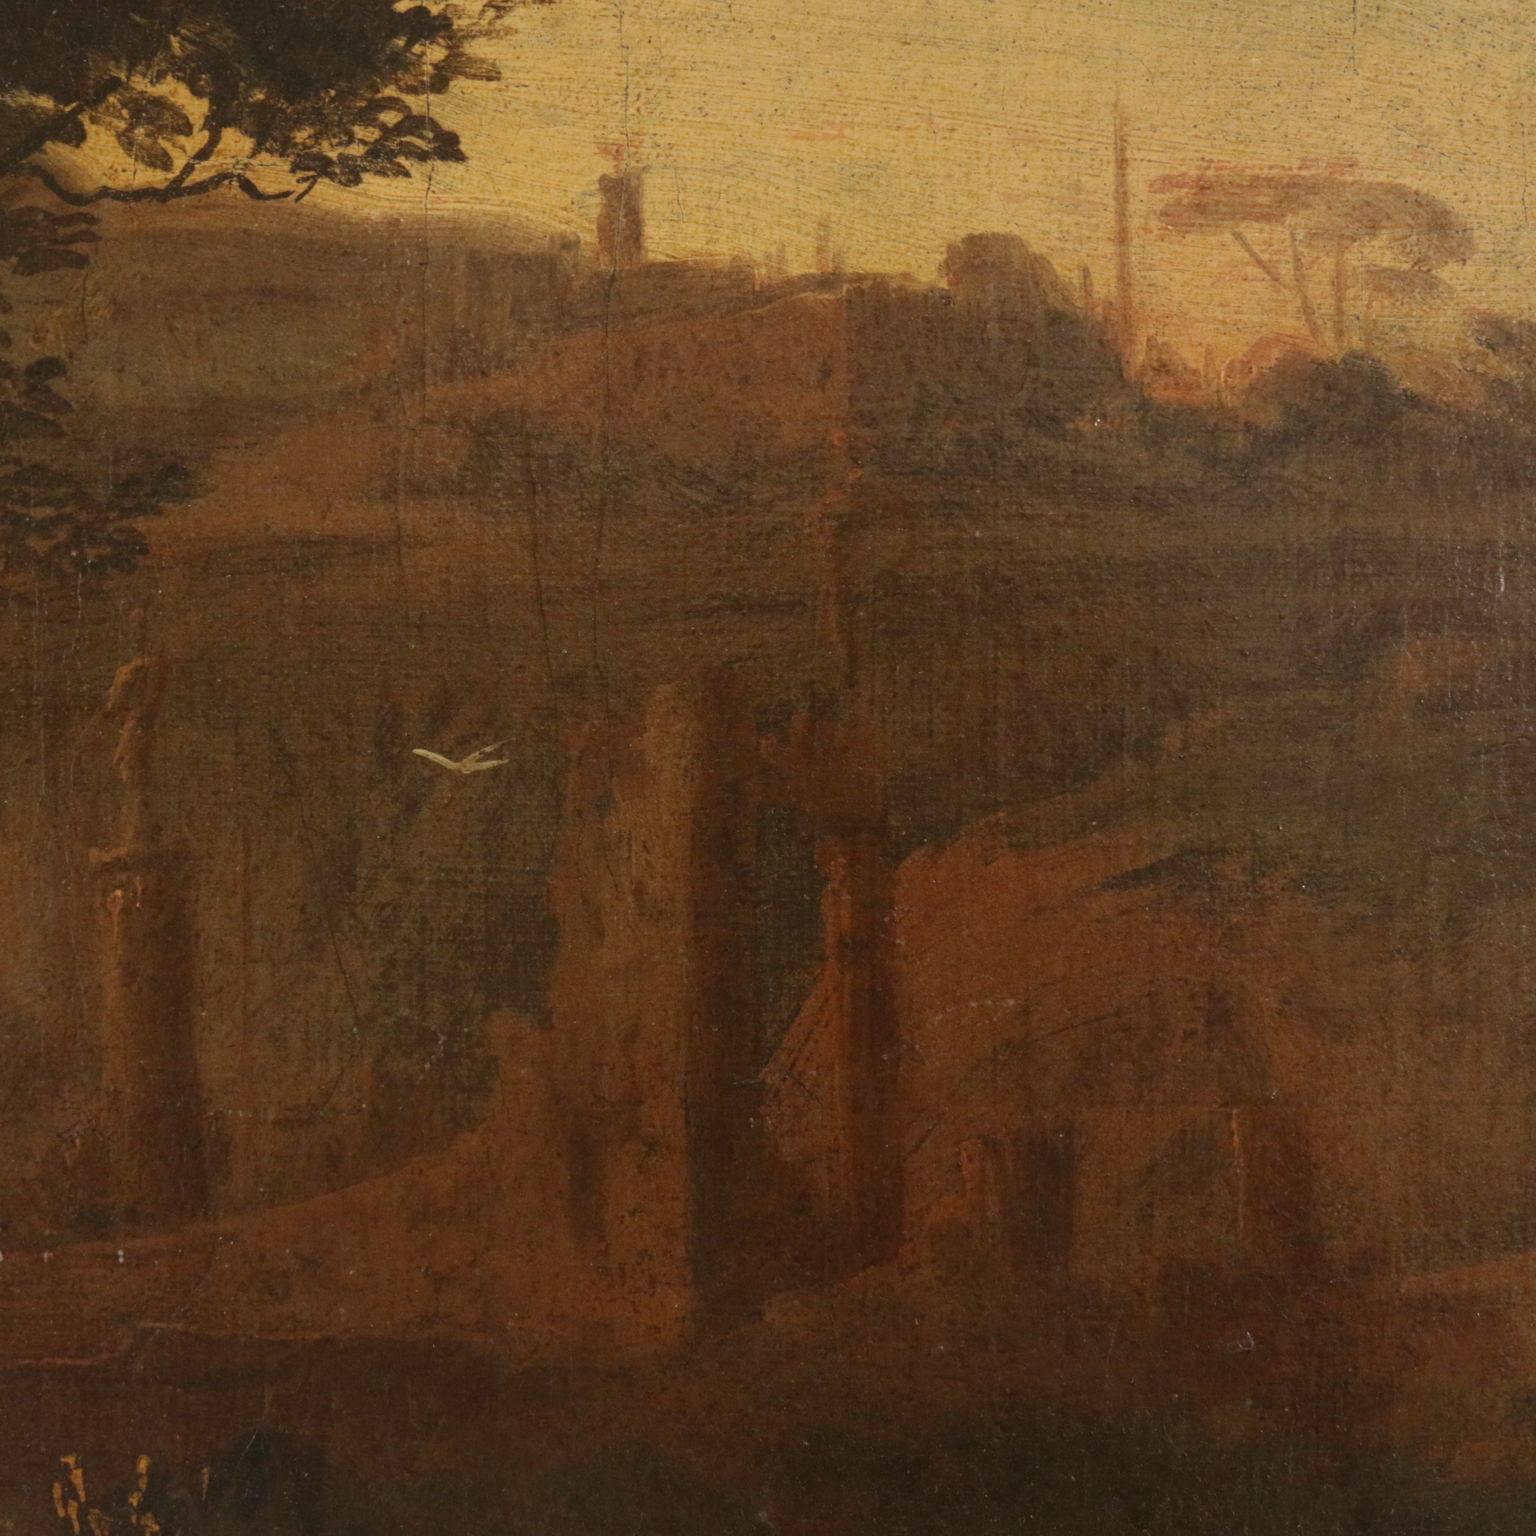 Landscape with Figures, Oil on Canvas, Italian School 18th Century 1